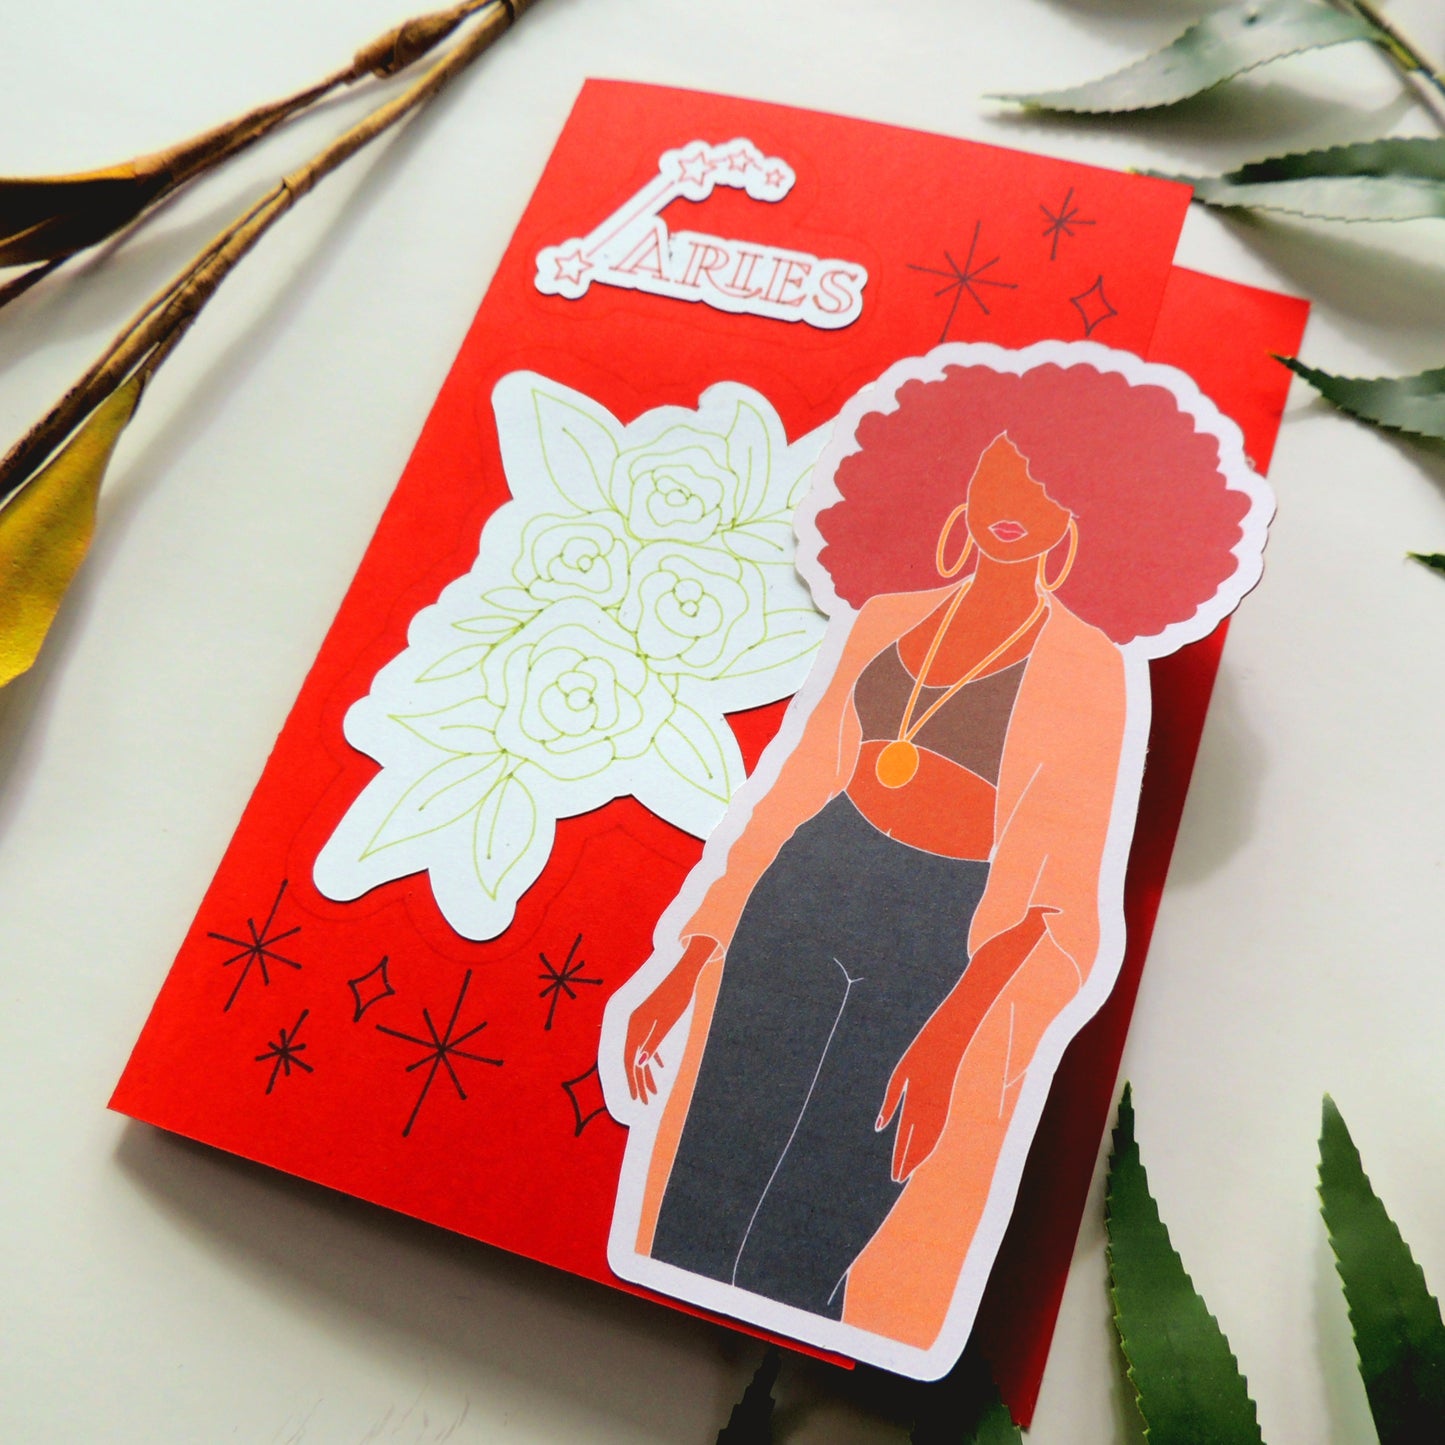 Afro Beauty Aries Zodiac Greeting Card